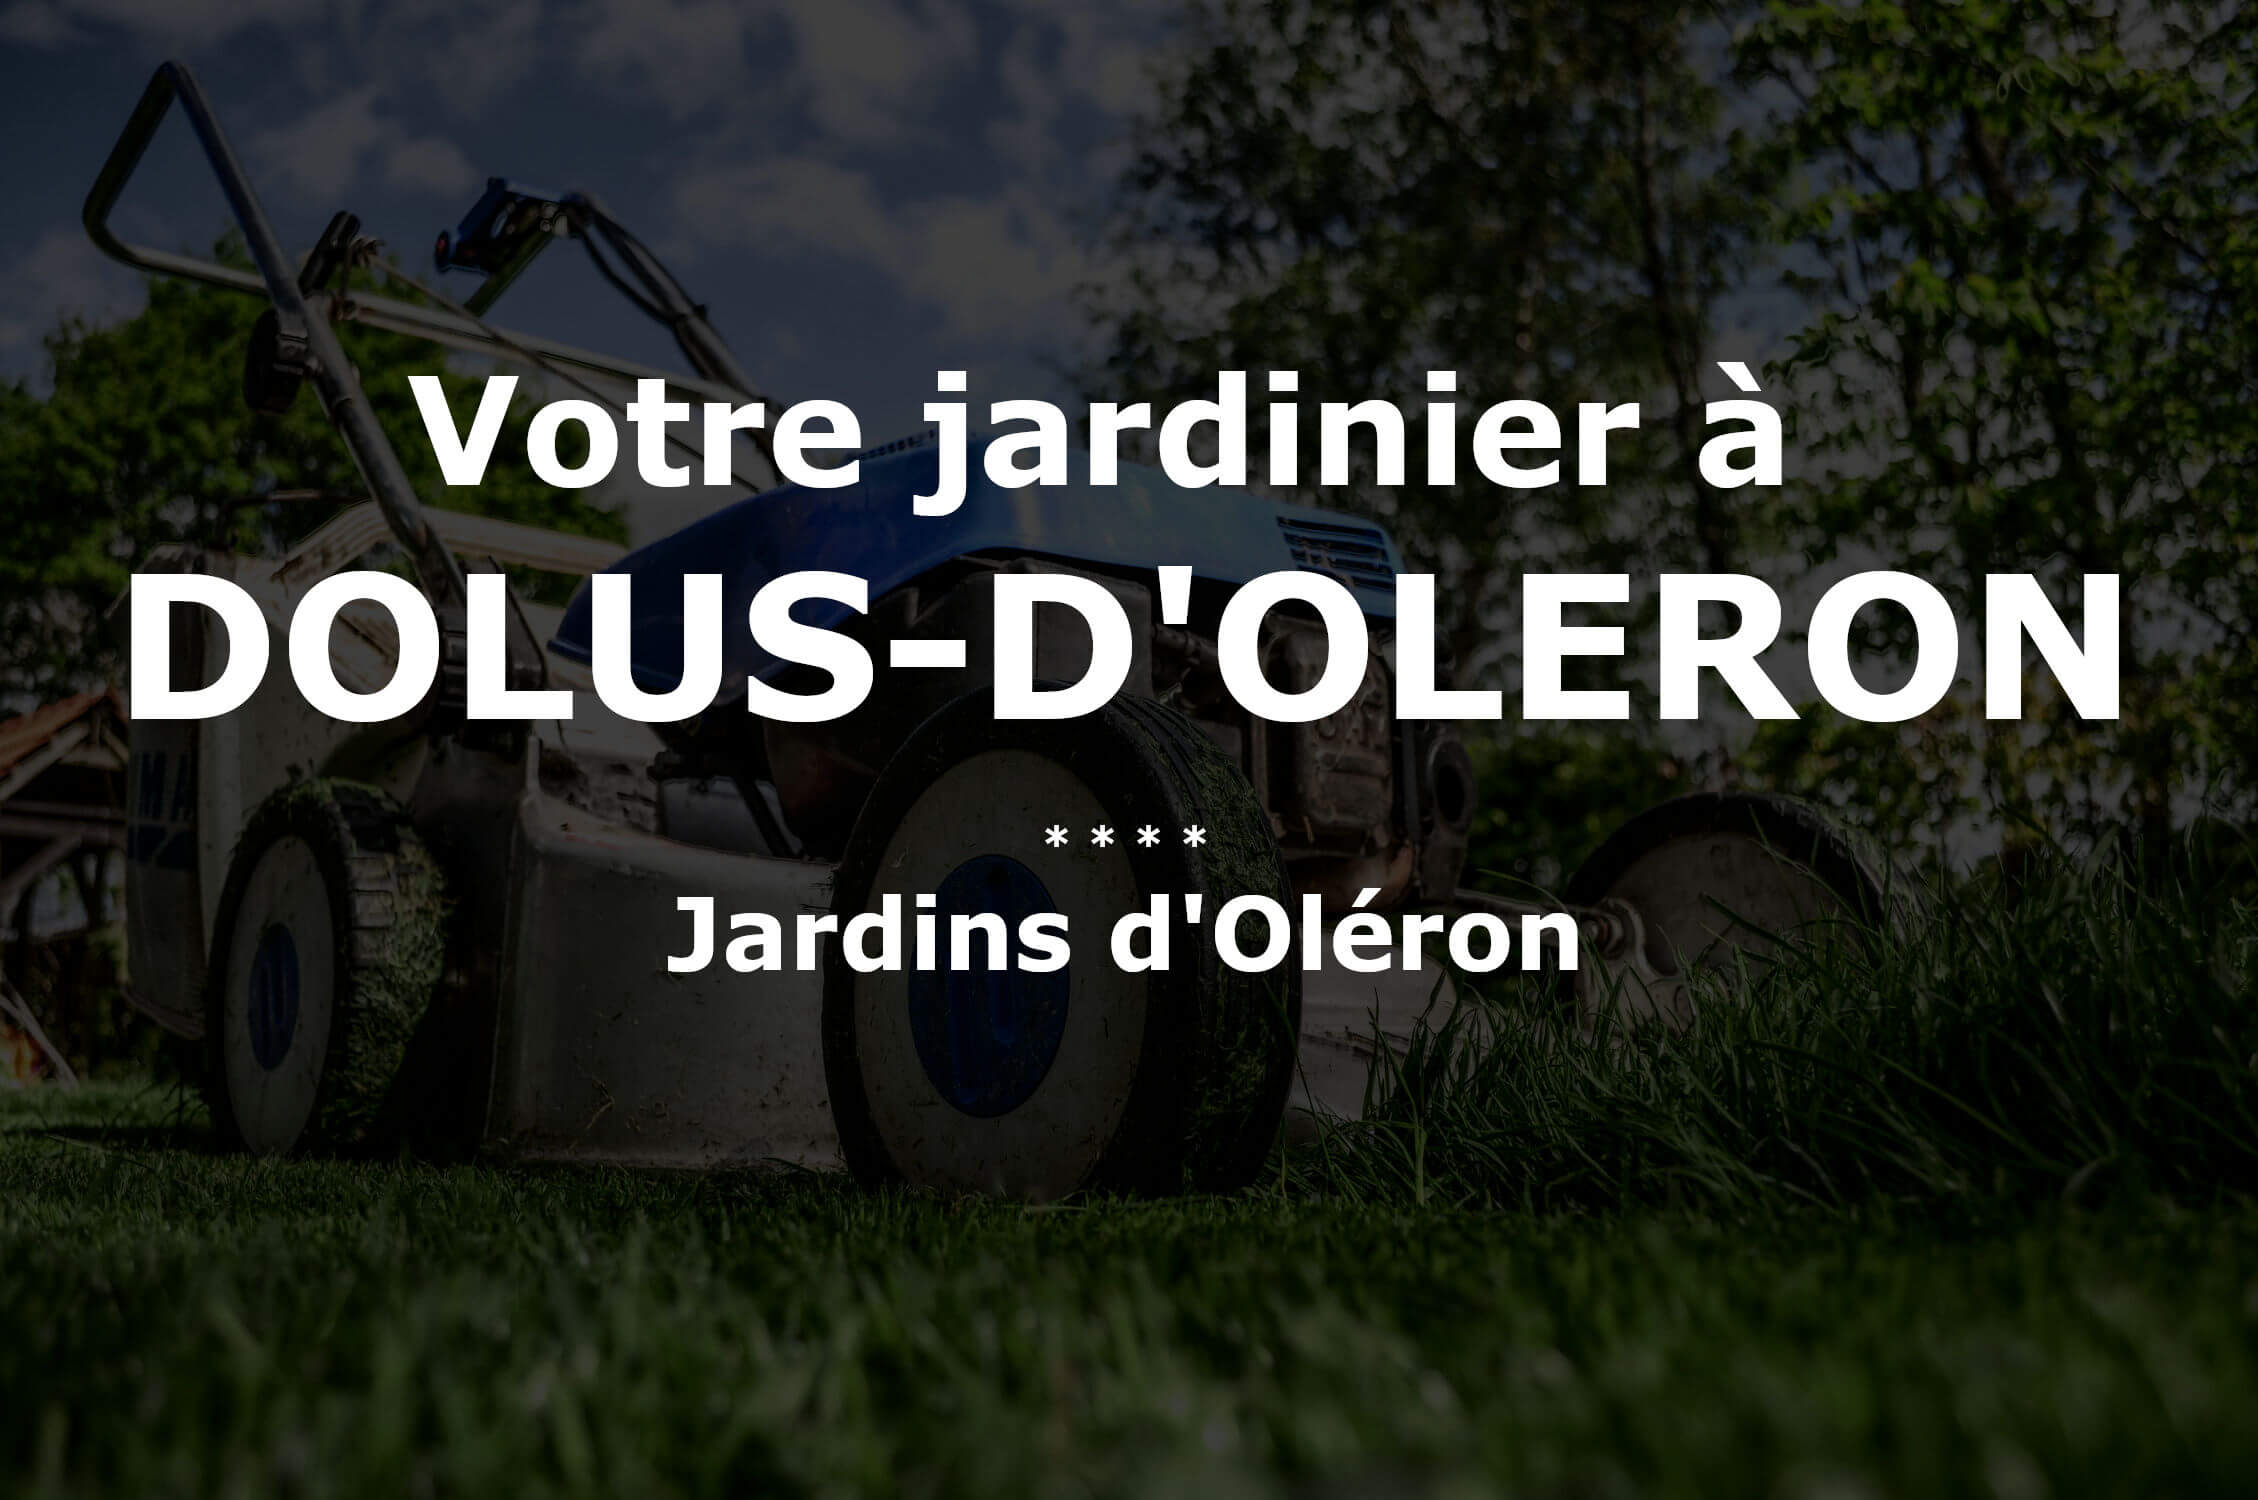 Jardinier Dolus-d'Oléron